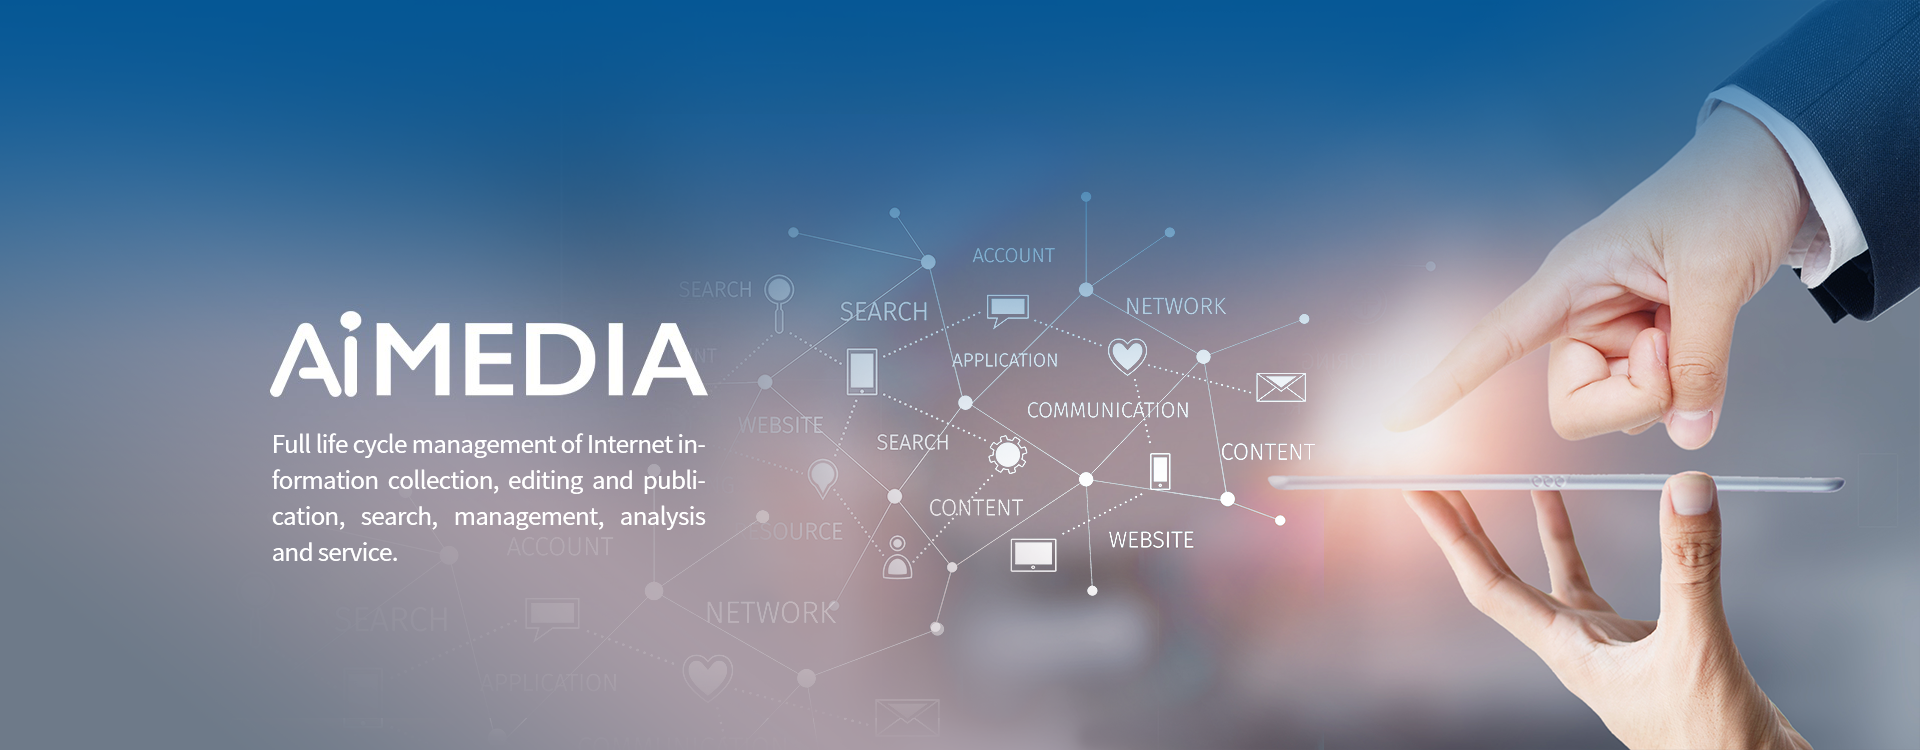 AiMedia New Media Management System